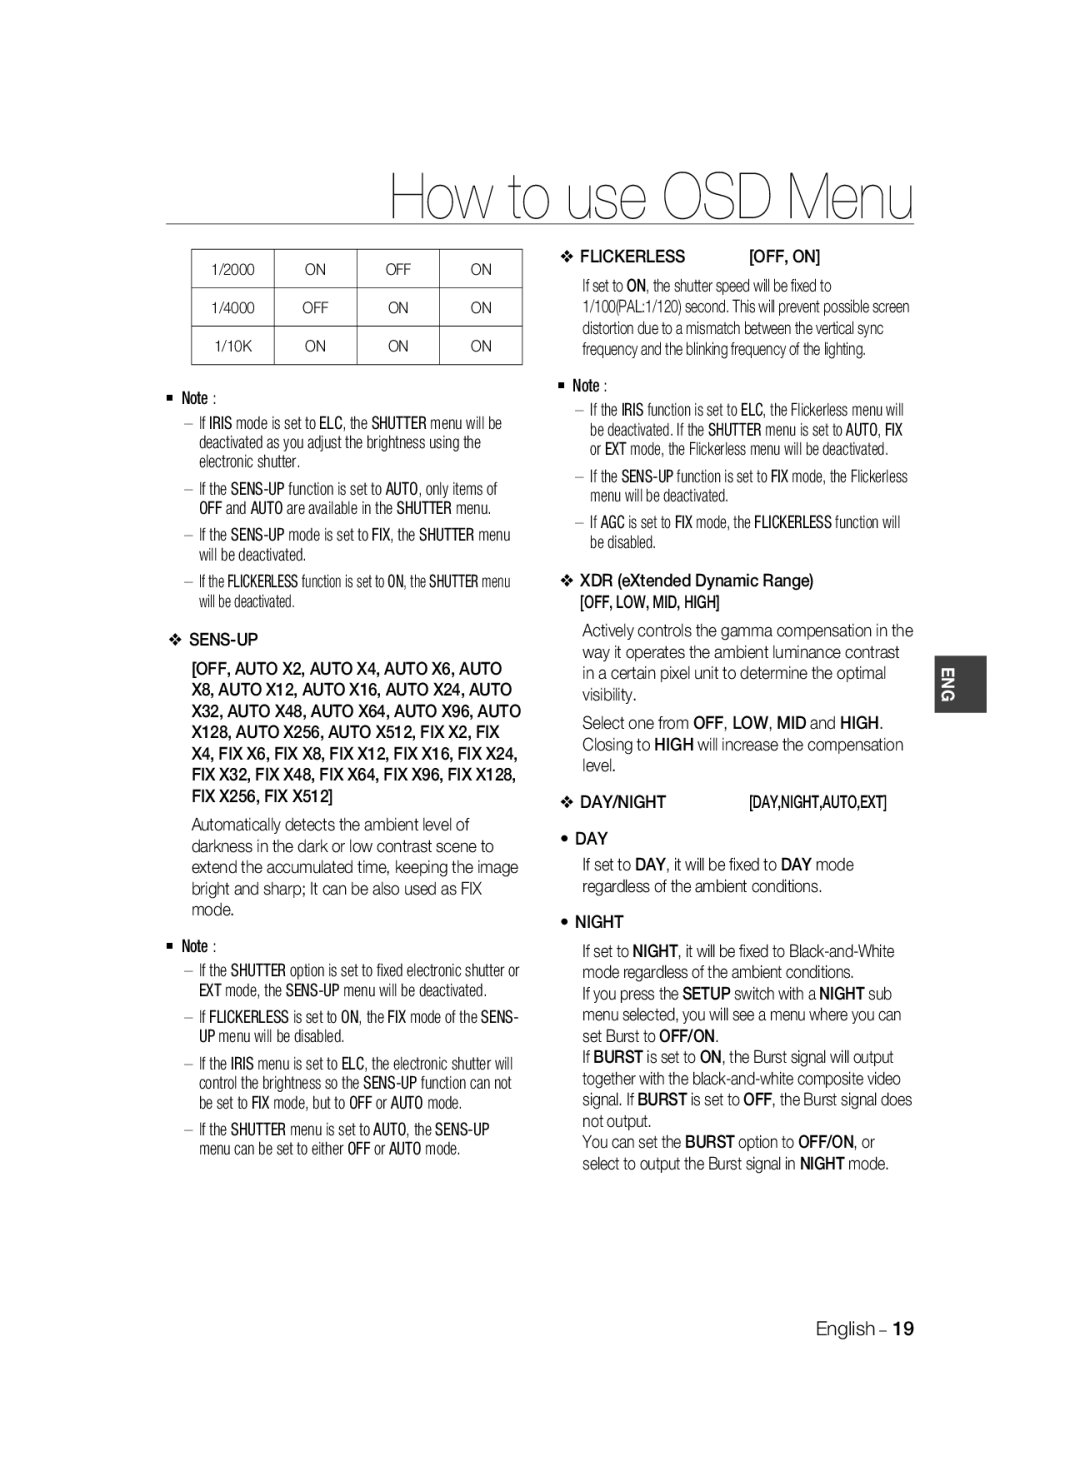 Samsung SCC-B2037P, SCC-B2337P, SCC-B2337N user manual How to use OSD Menu, Day,Night,Auto,Ext 